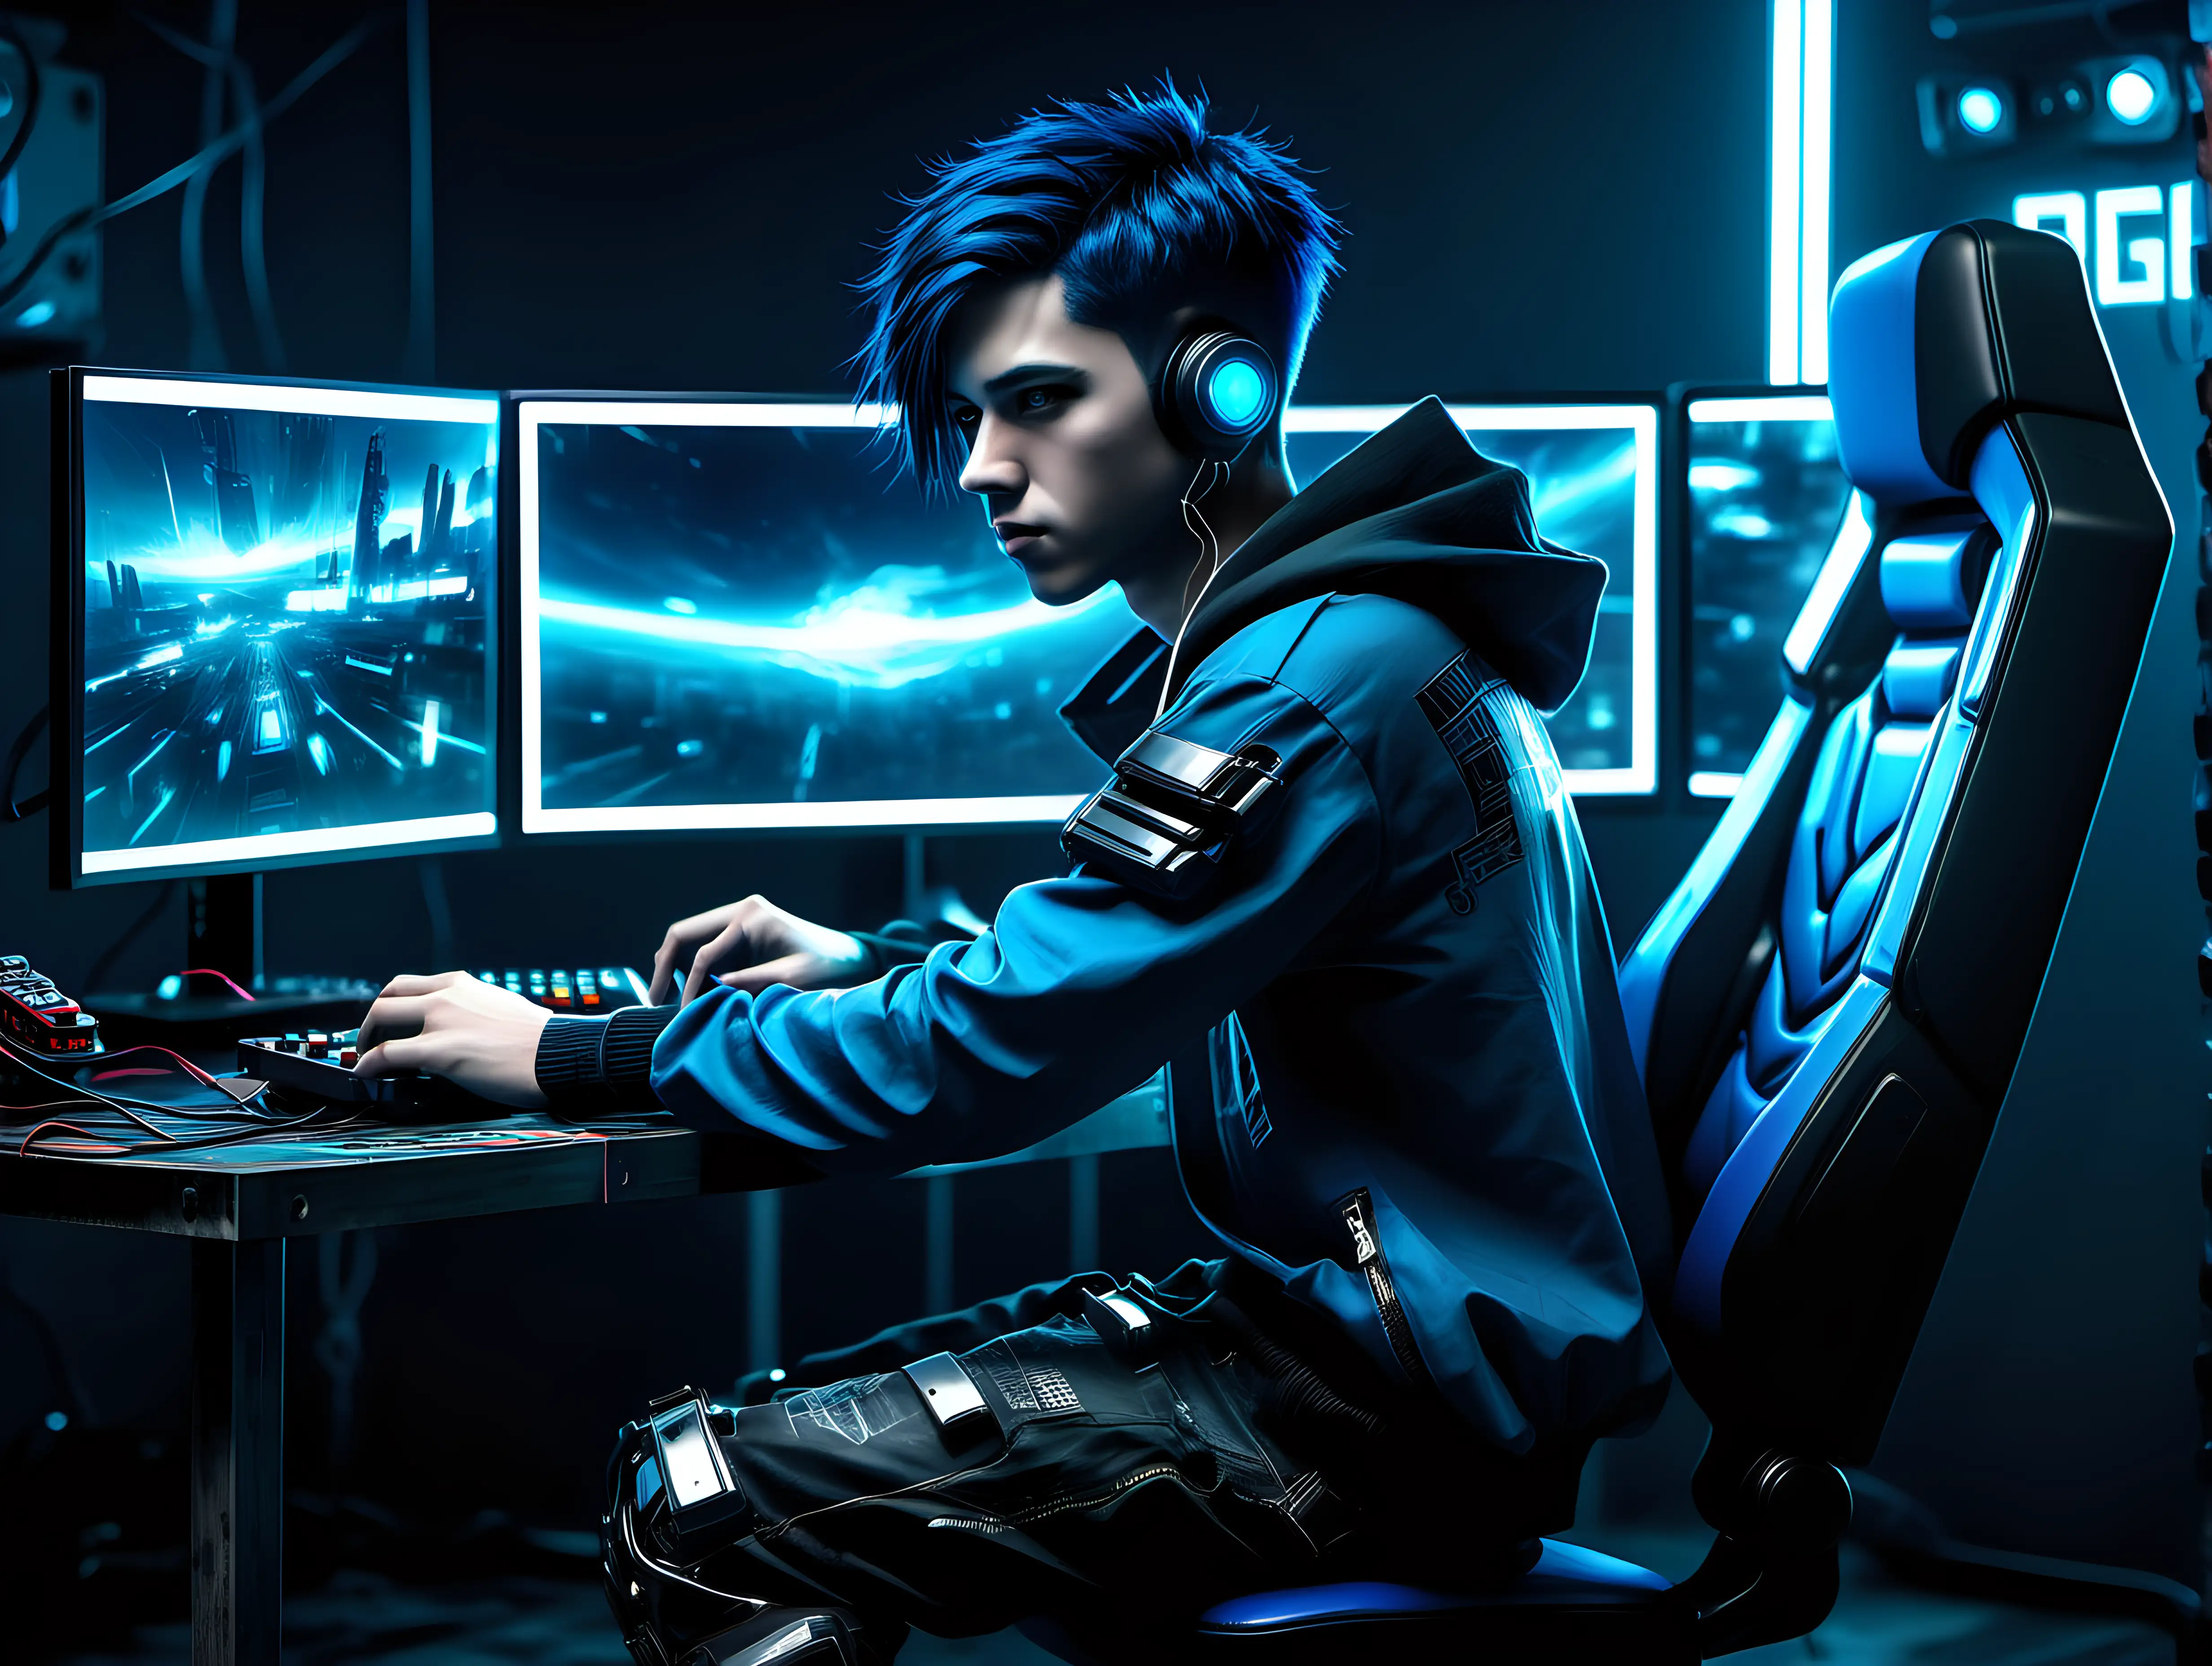 Cyberpunk Boy with Dark Ocean Blue Hair at Gaming Setup